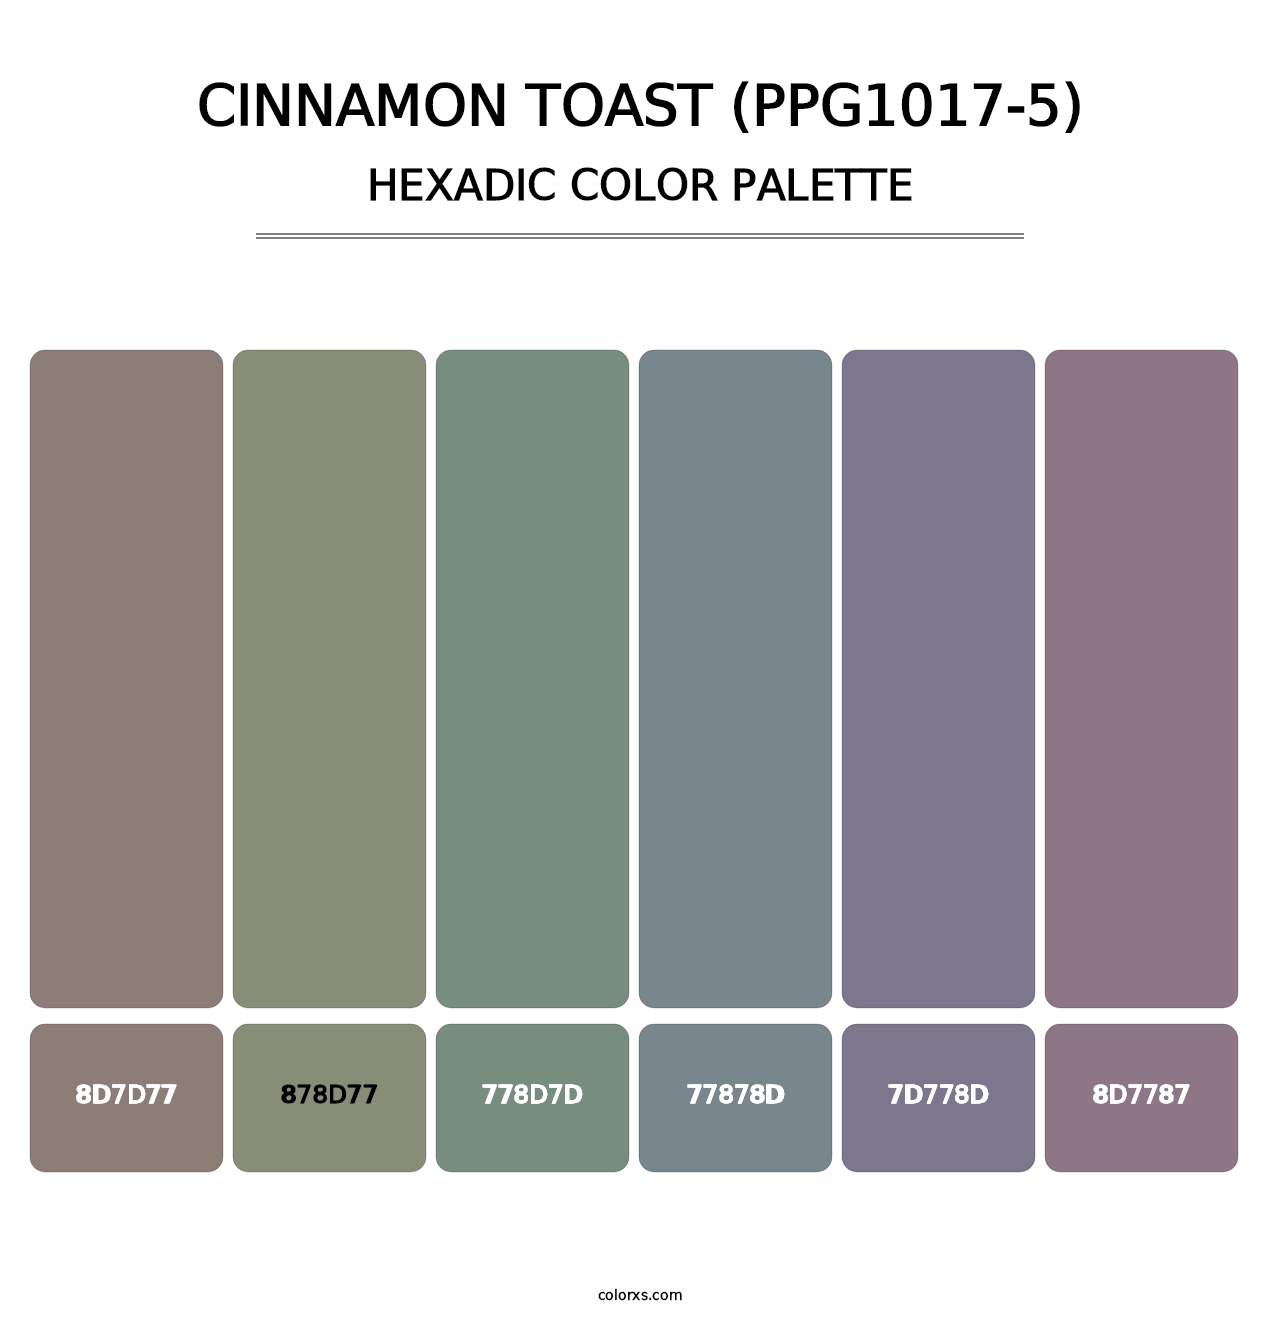 Cinnamon Toast (PPG1017-5) - Hexadic Color Palette